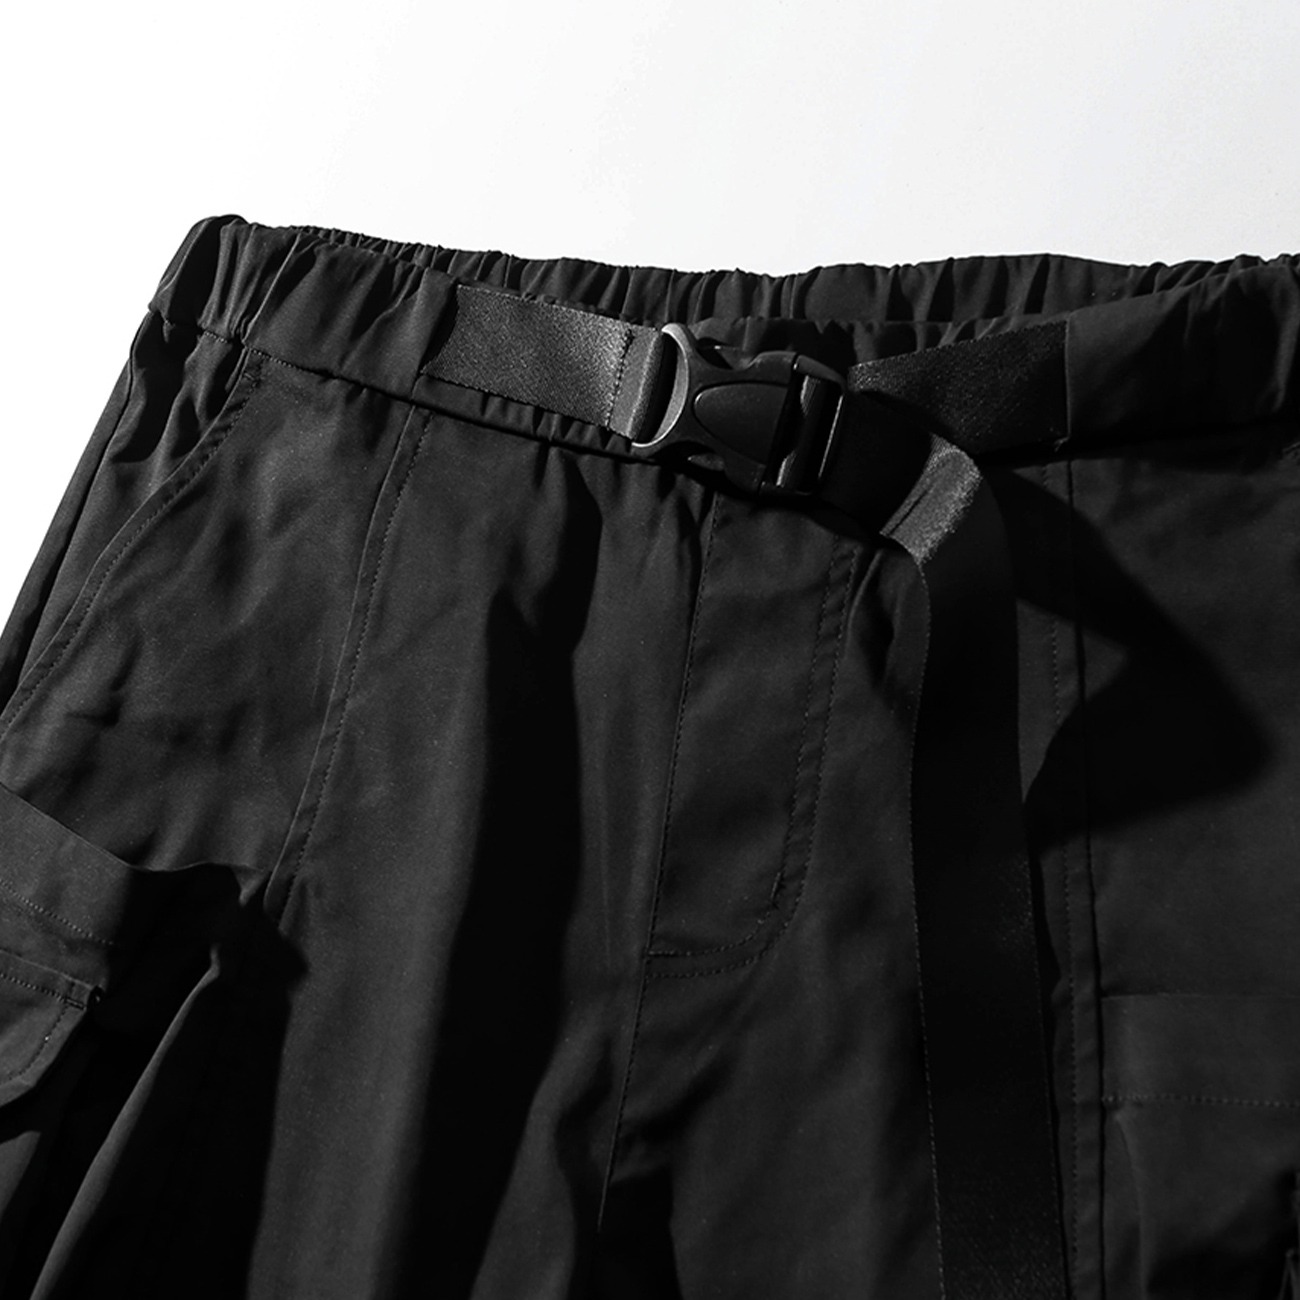 Darkwear Cyberpunk shorts - Cyberpunk Clothing